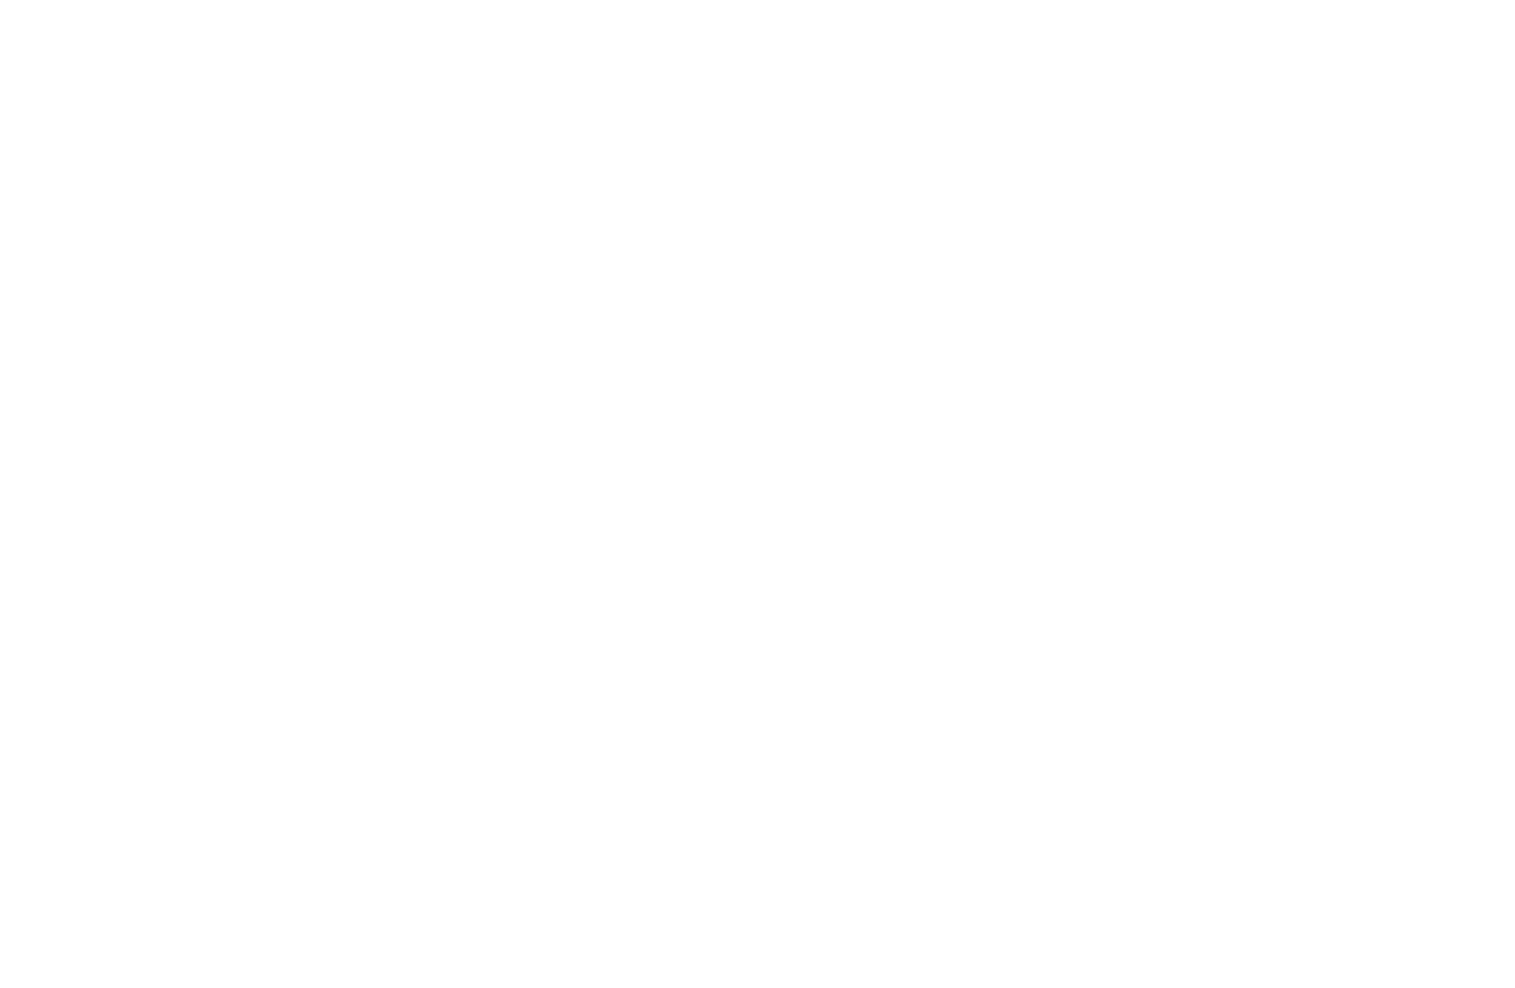 Logo Meistermetzgerei Gerold Hosp